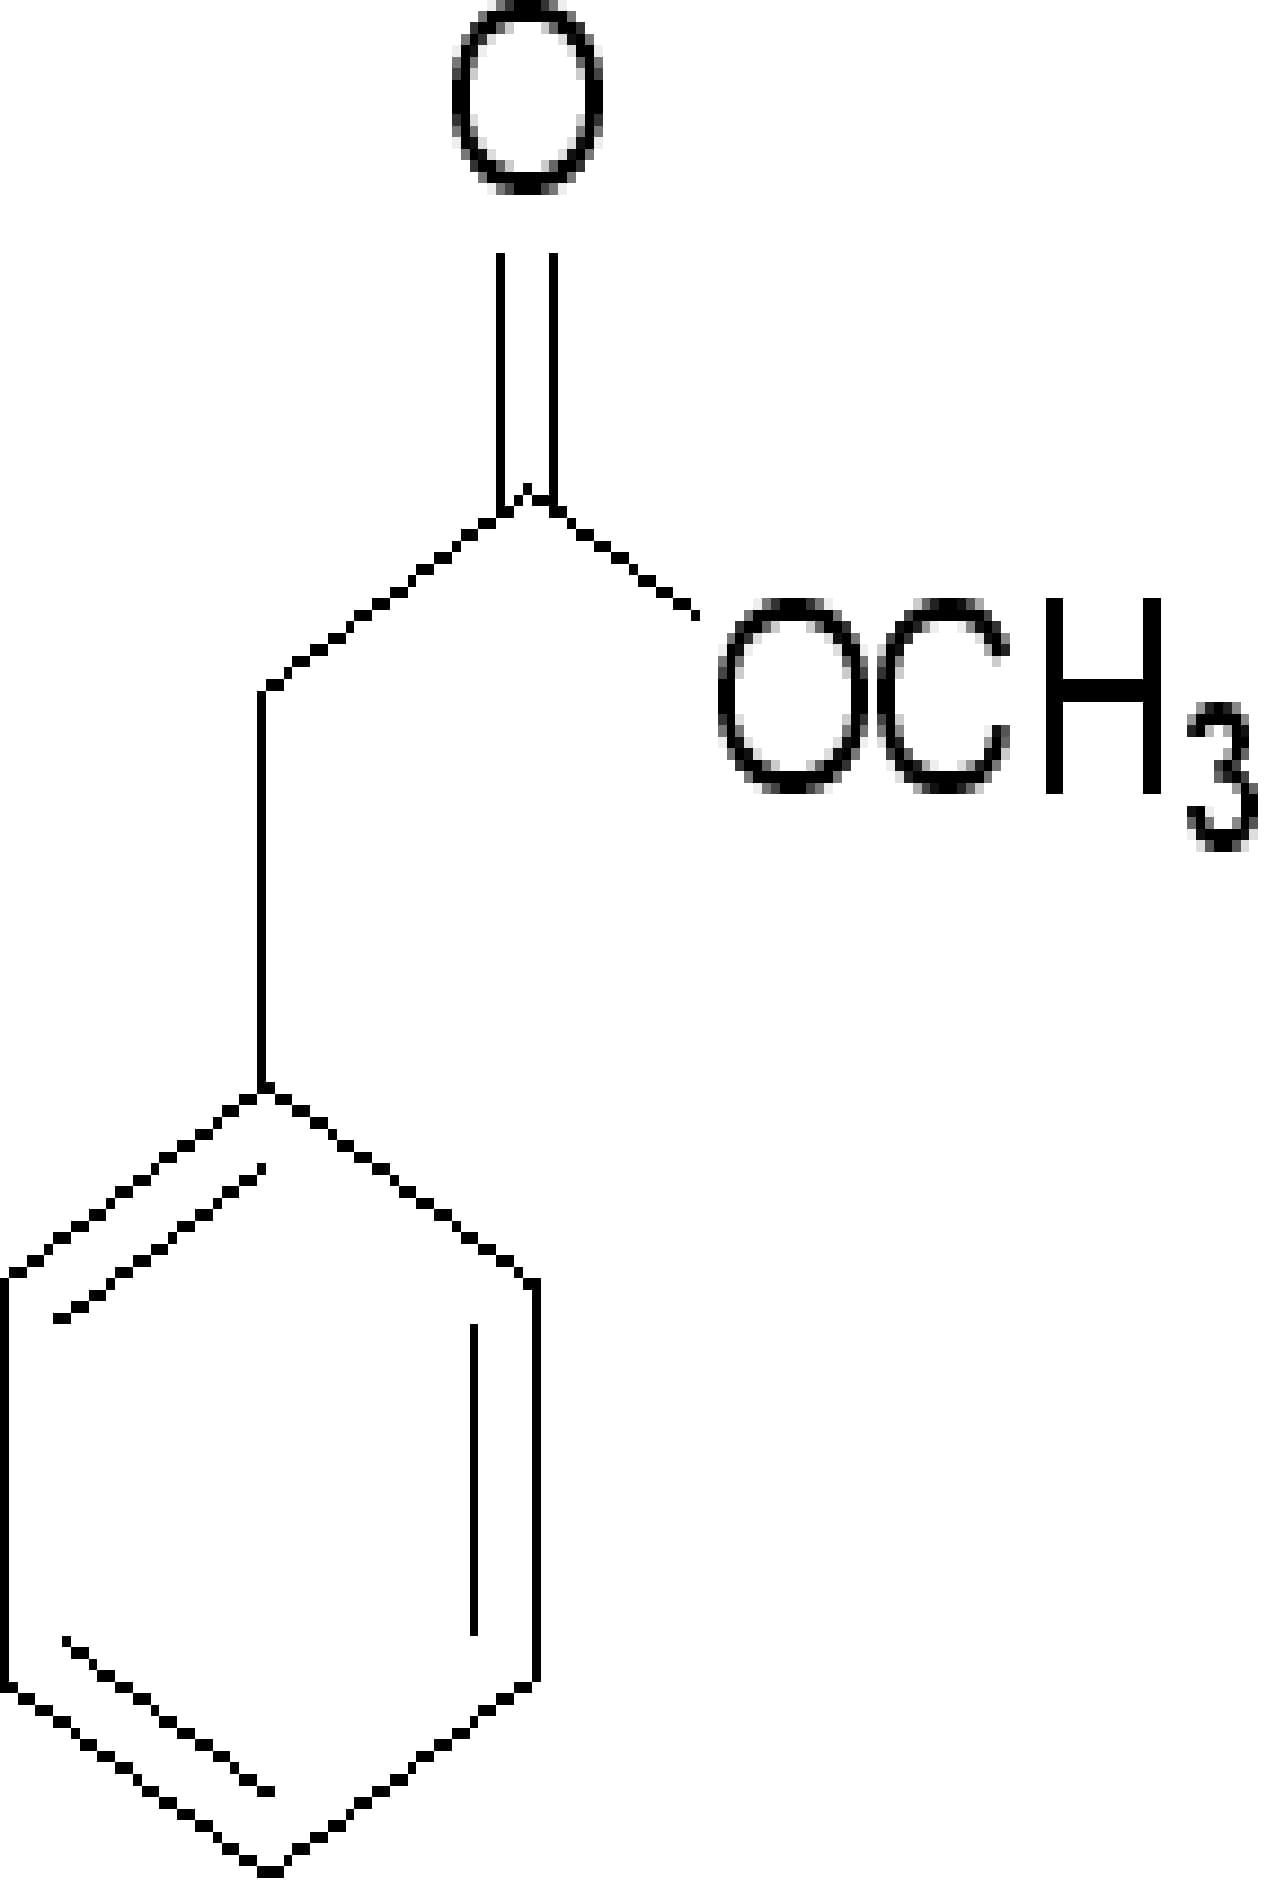 Methyl Phenyl Acetate CAS No. 101-41-7